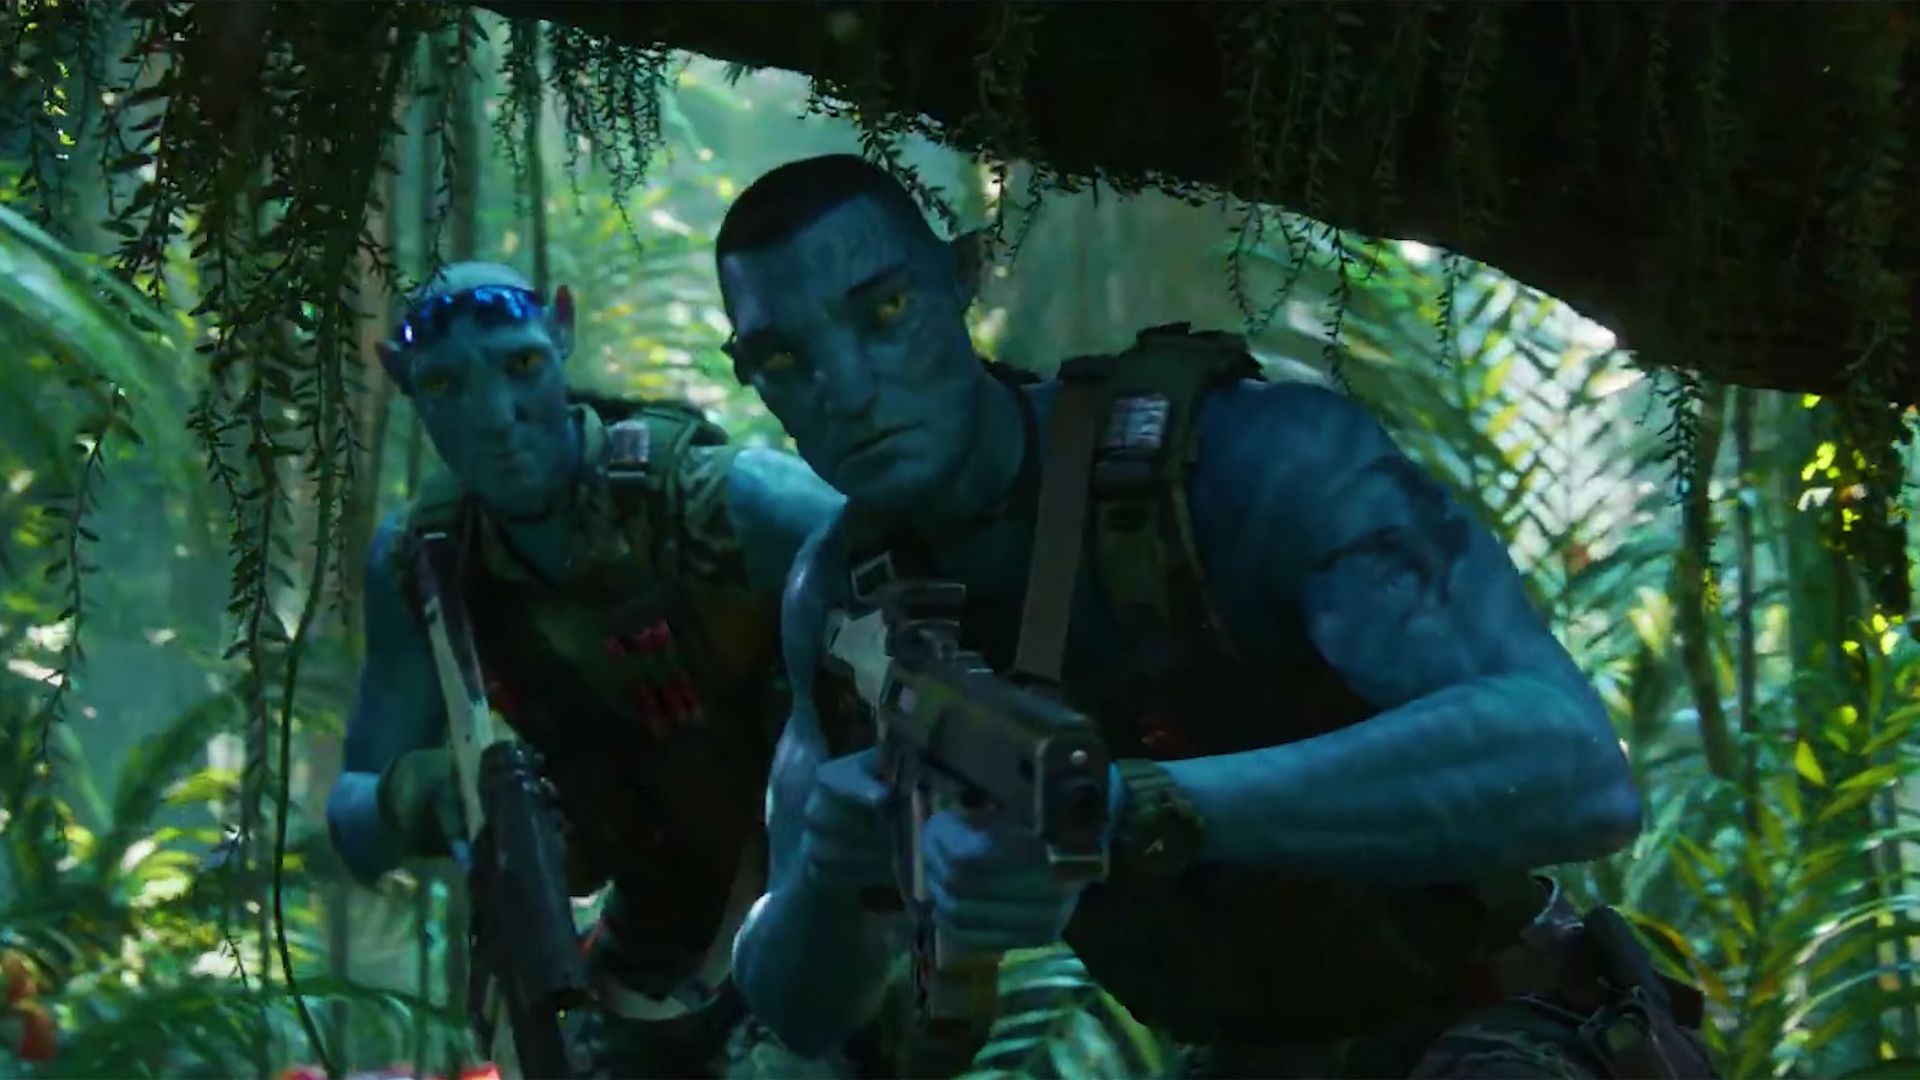 Аватар 2: Путь воды, Avatar 2 The Way of Water, 4k, trailer (horizontal)